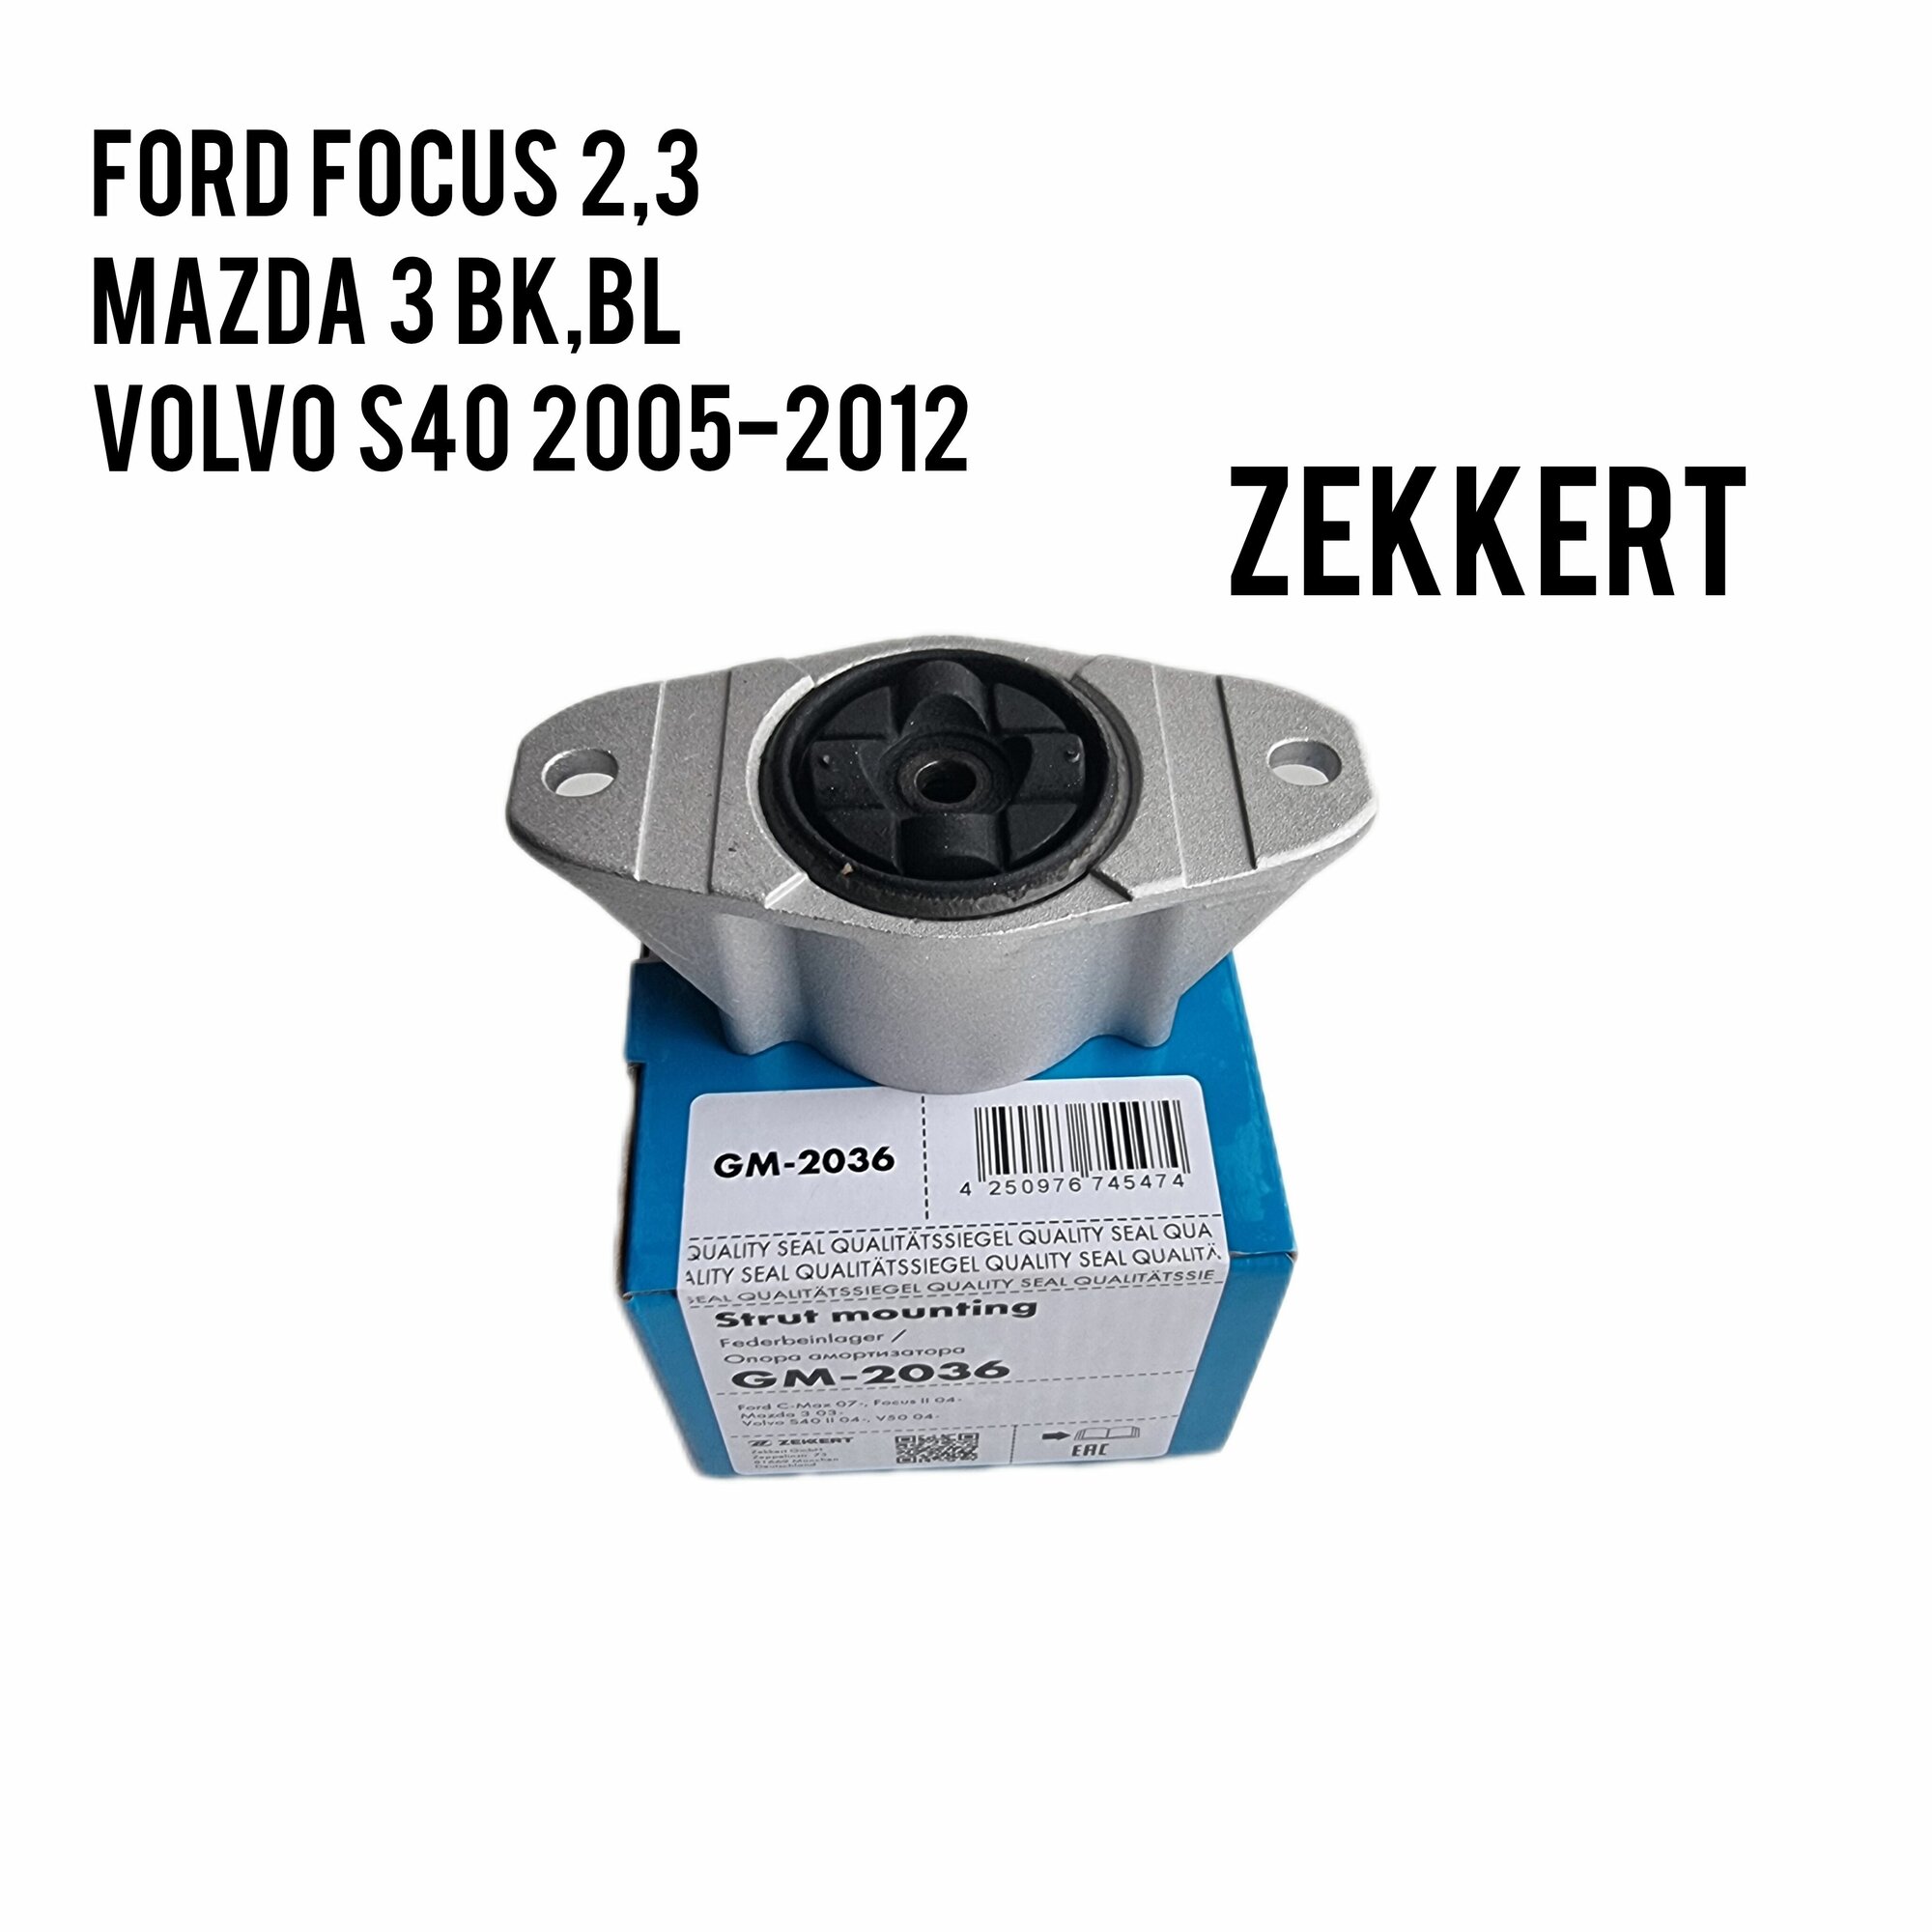 Опора заднего амортизатора Zekkert для Ford Focus 2,3, C-Max, Volvo S40, Mazda 3 bk, bl gm-2036